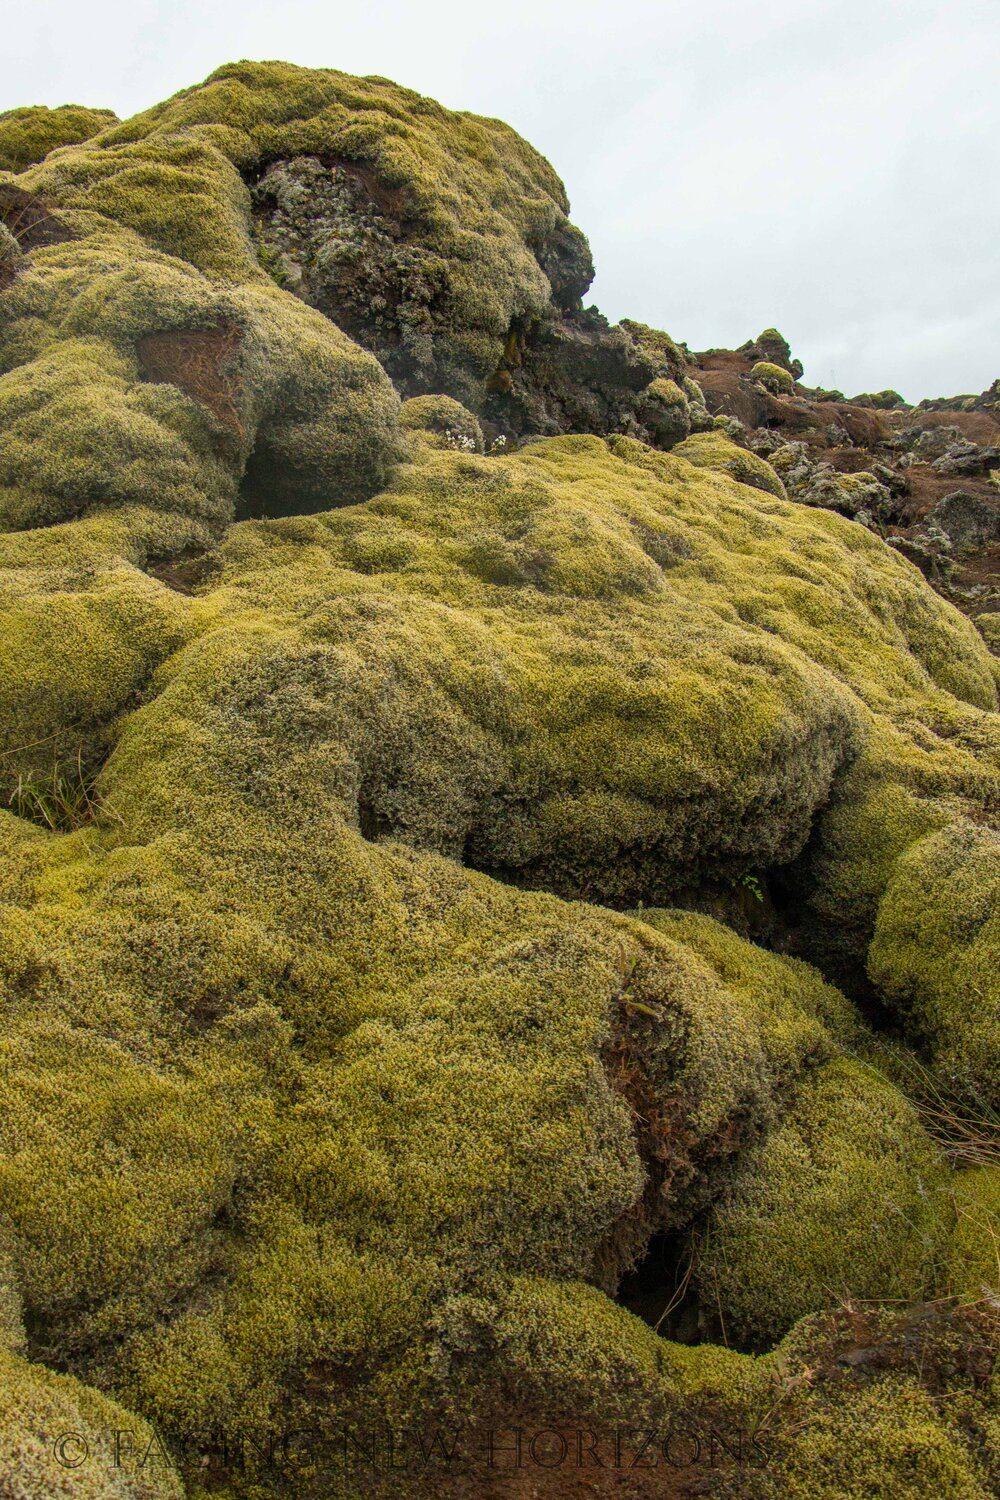  Moss-covered lava rocks 